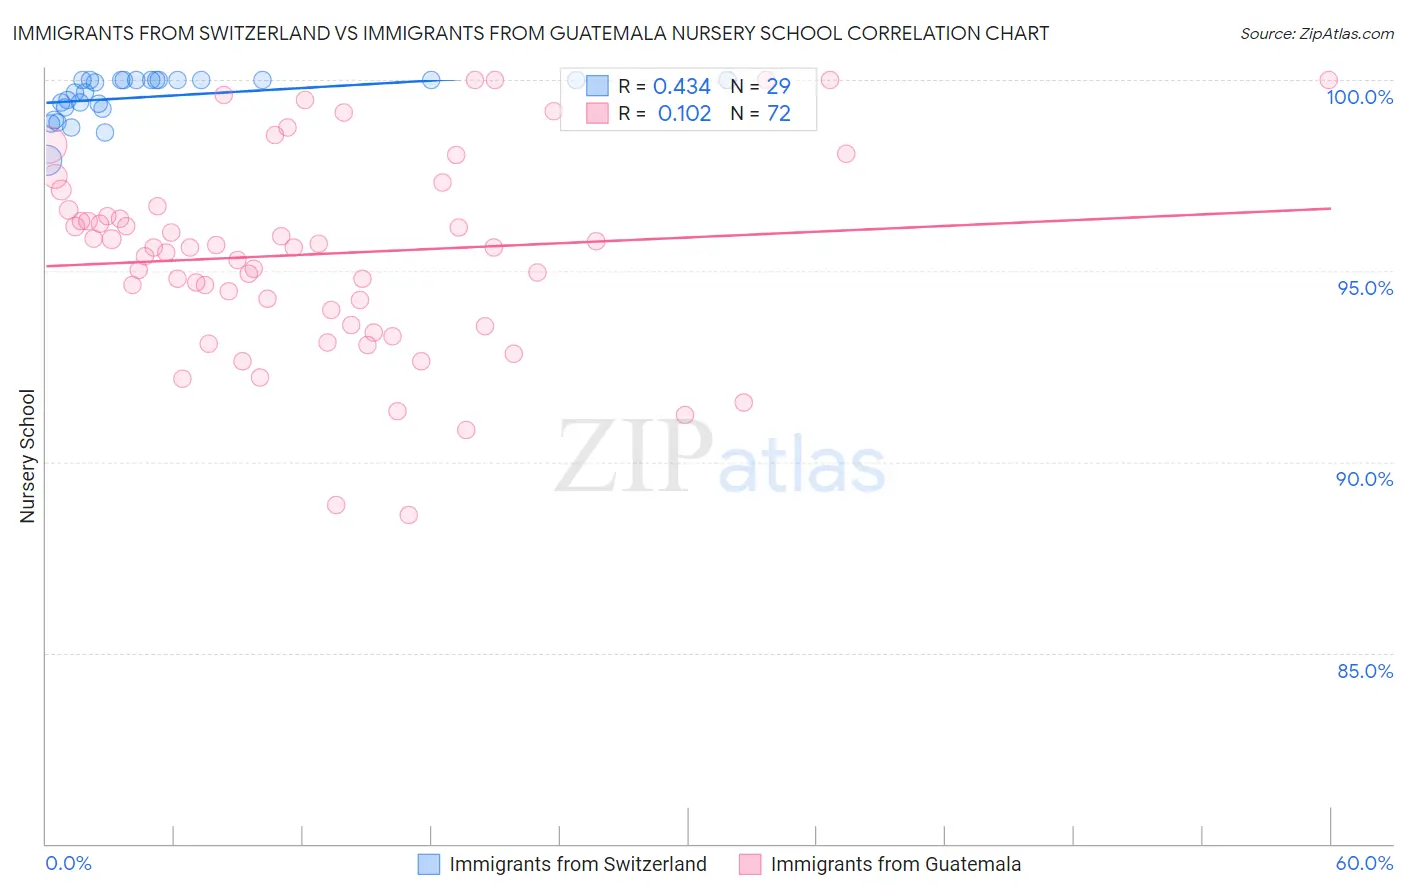 Immigrants from Switzerland vs Immigrants from Guatemala Nursery School